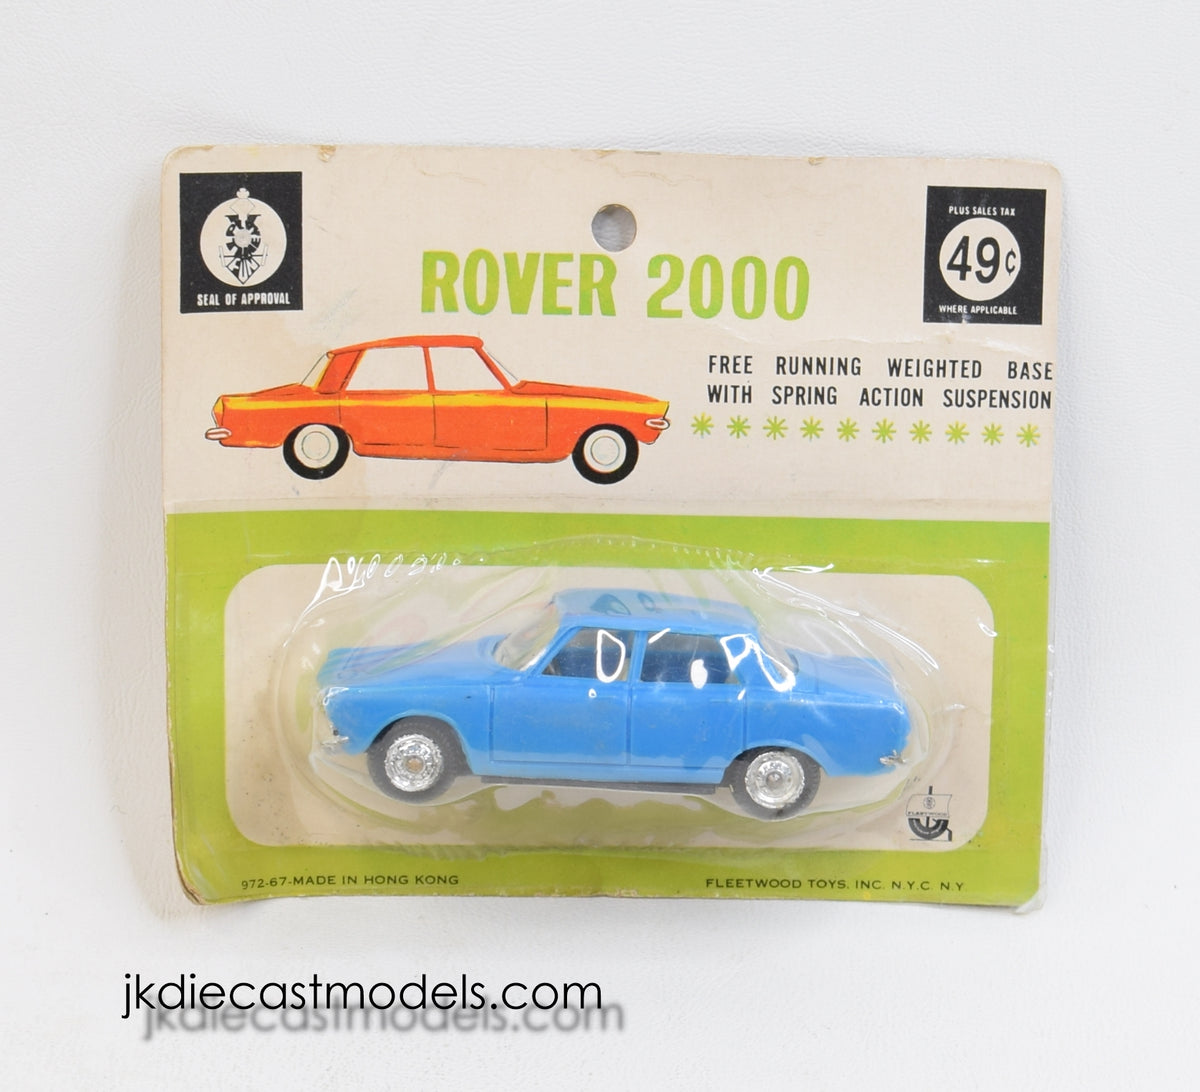 Fleetwood Toys - Hong Kong plastic - Rover 2000 Mint/blister